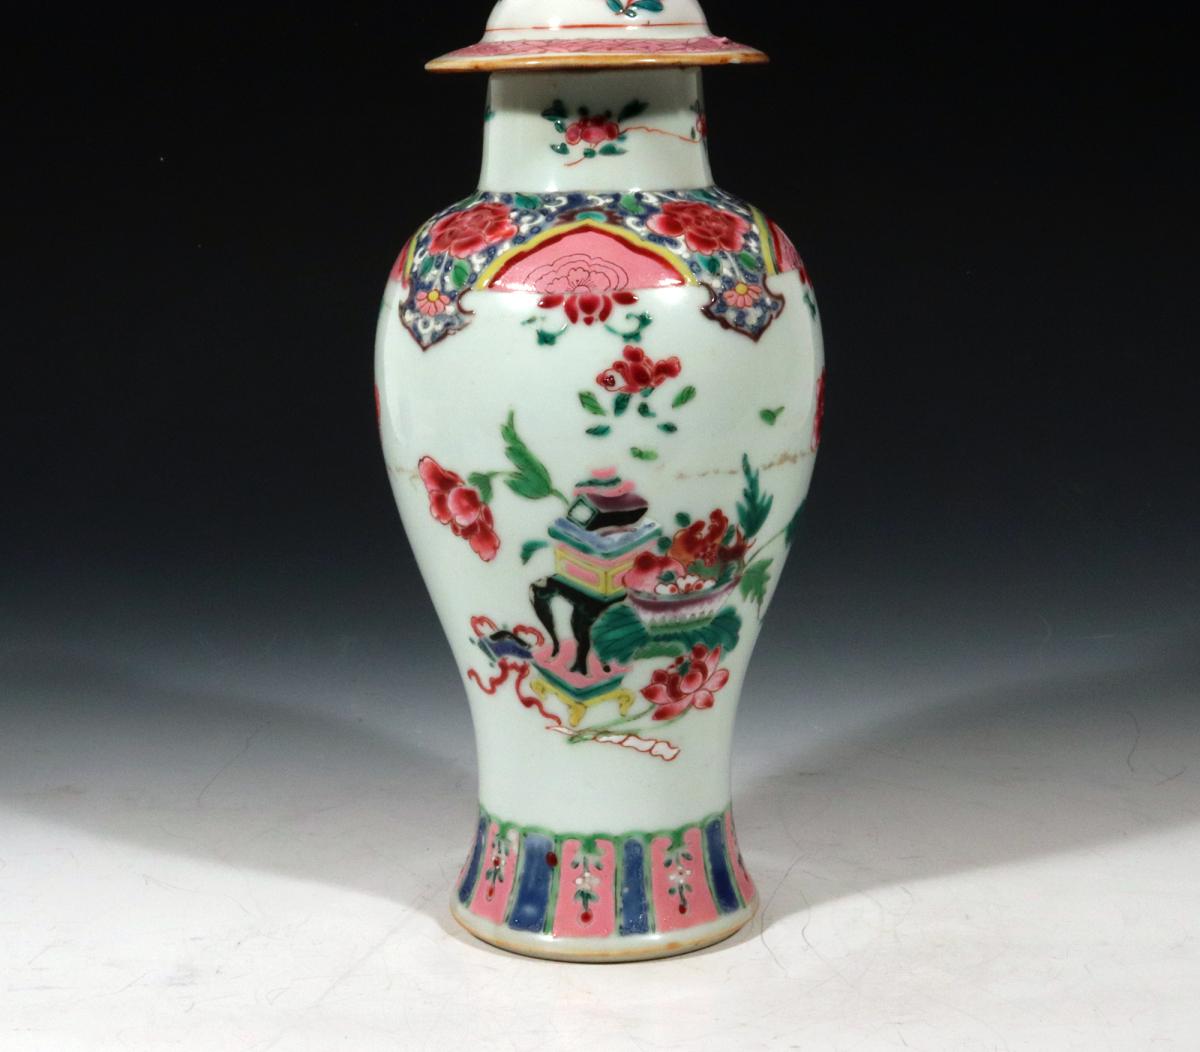 Chinese Export Five Piece Famille Rose Porcelain Garniture, Circa 1730-50